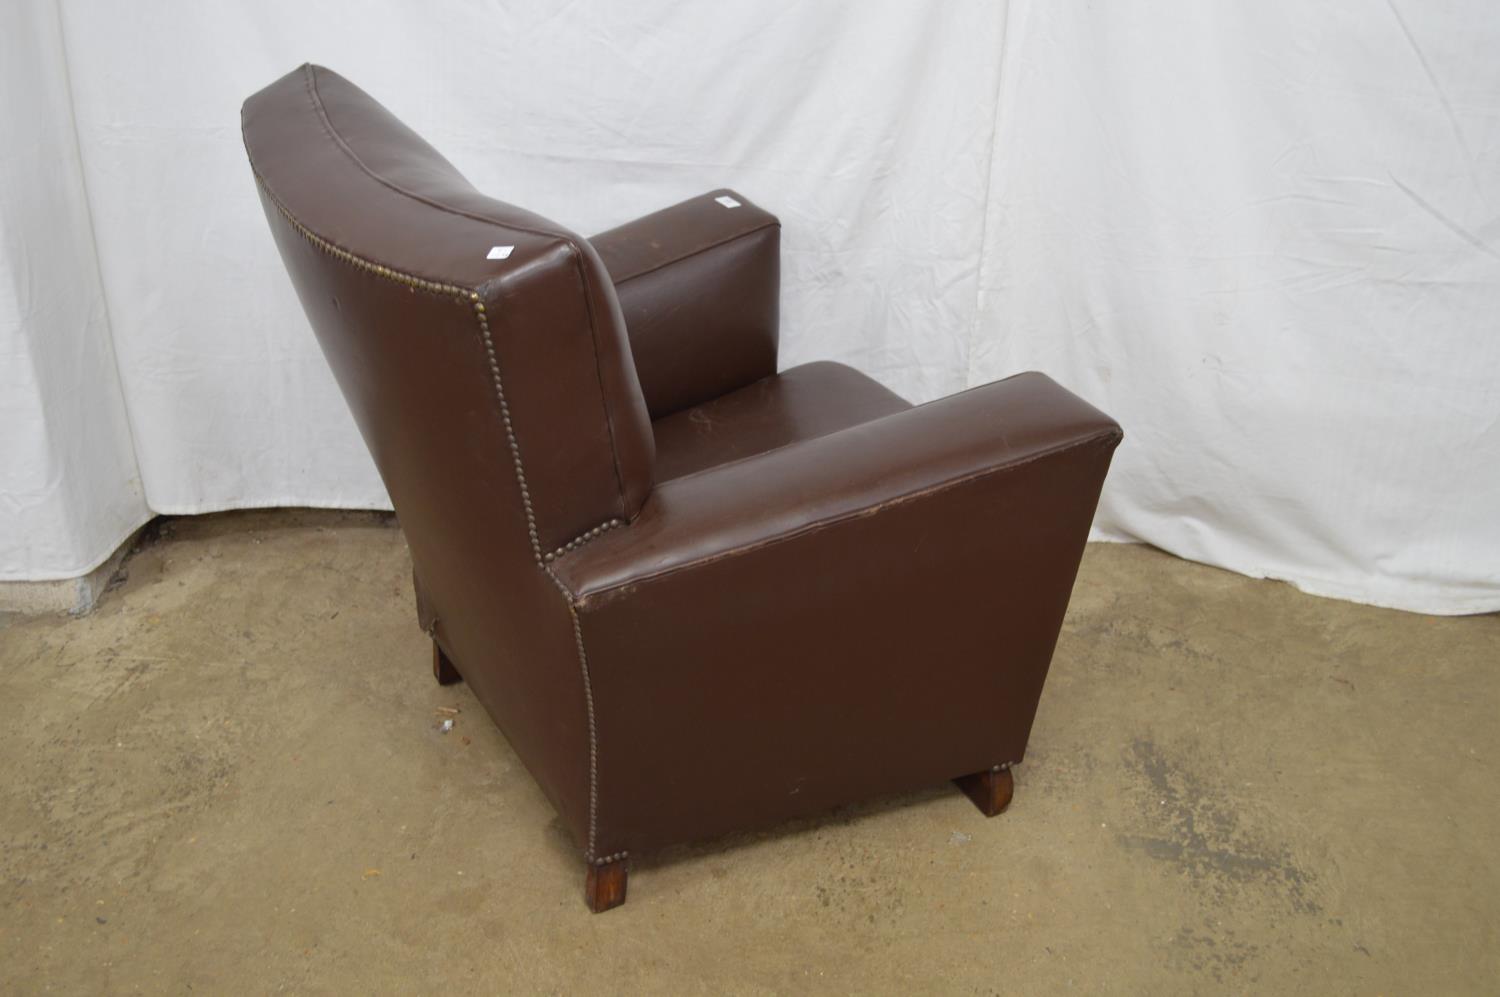 Brown leatherette Art Deco style club armchair on oak feet - 87cm x 83cm x 88cm tall Please note - Image 5 of 5